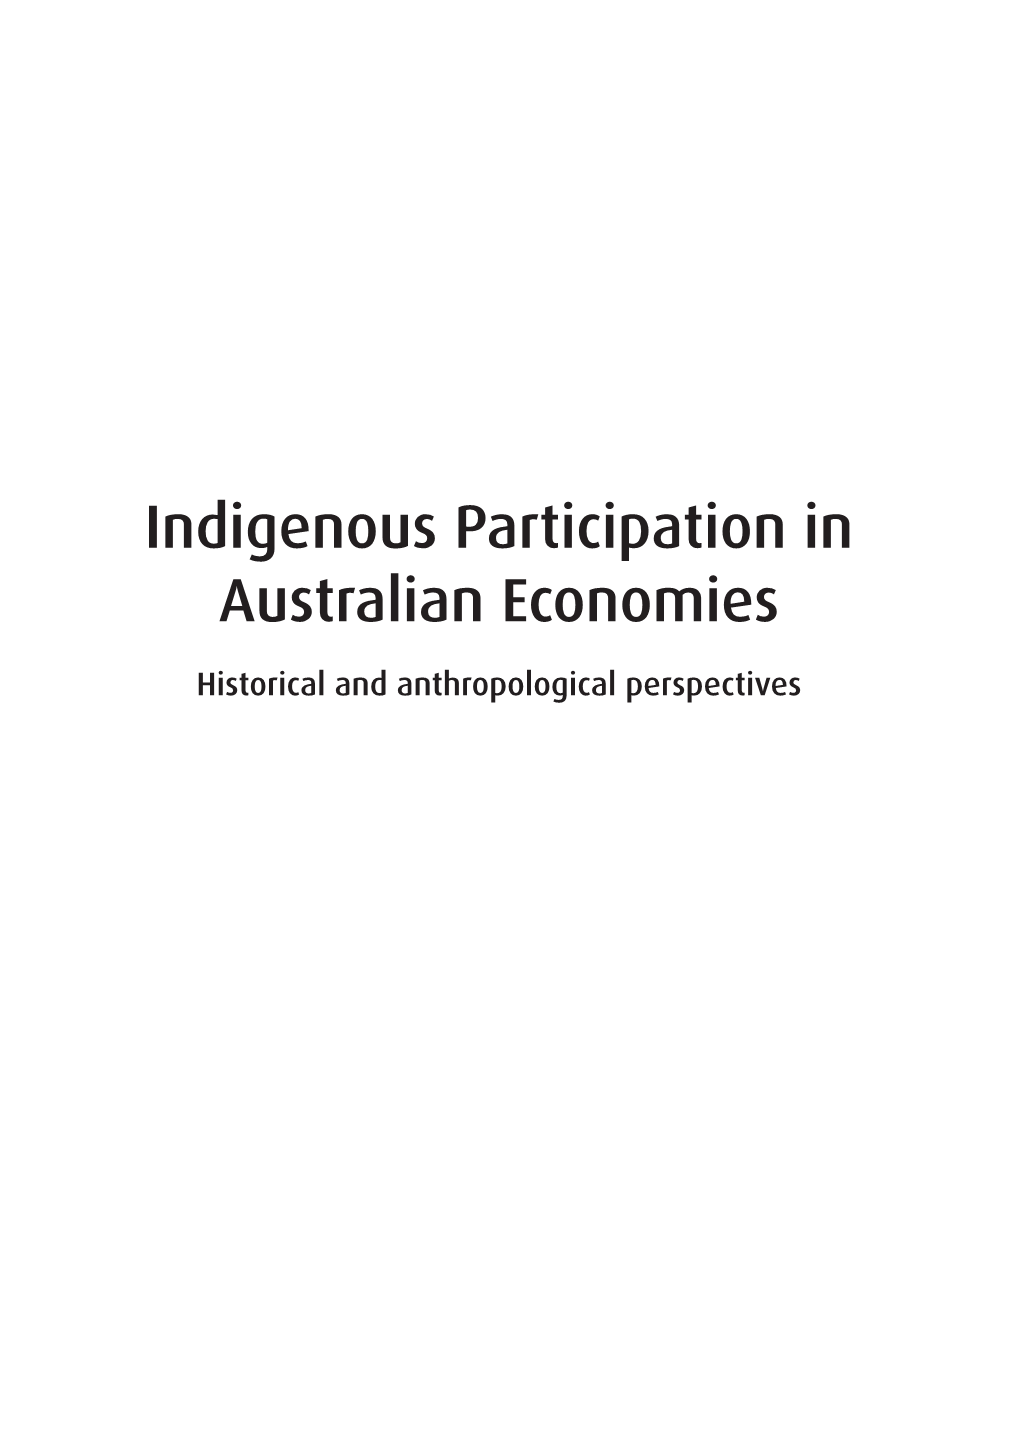 Indigenous Participation in Australian Economies